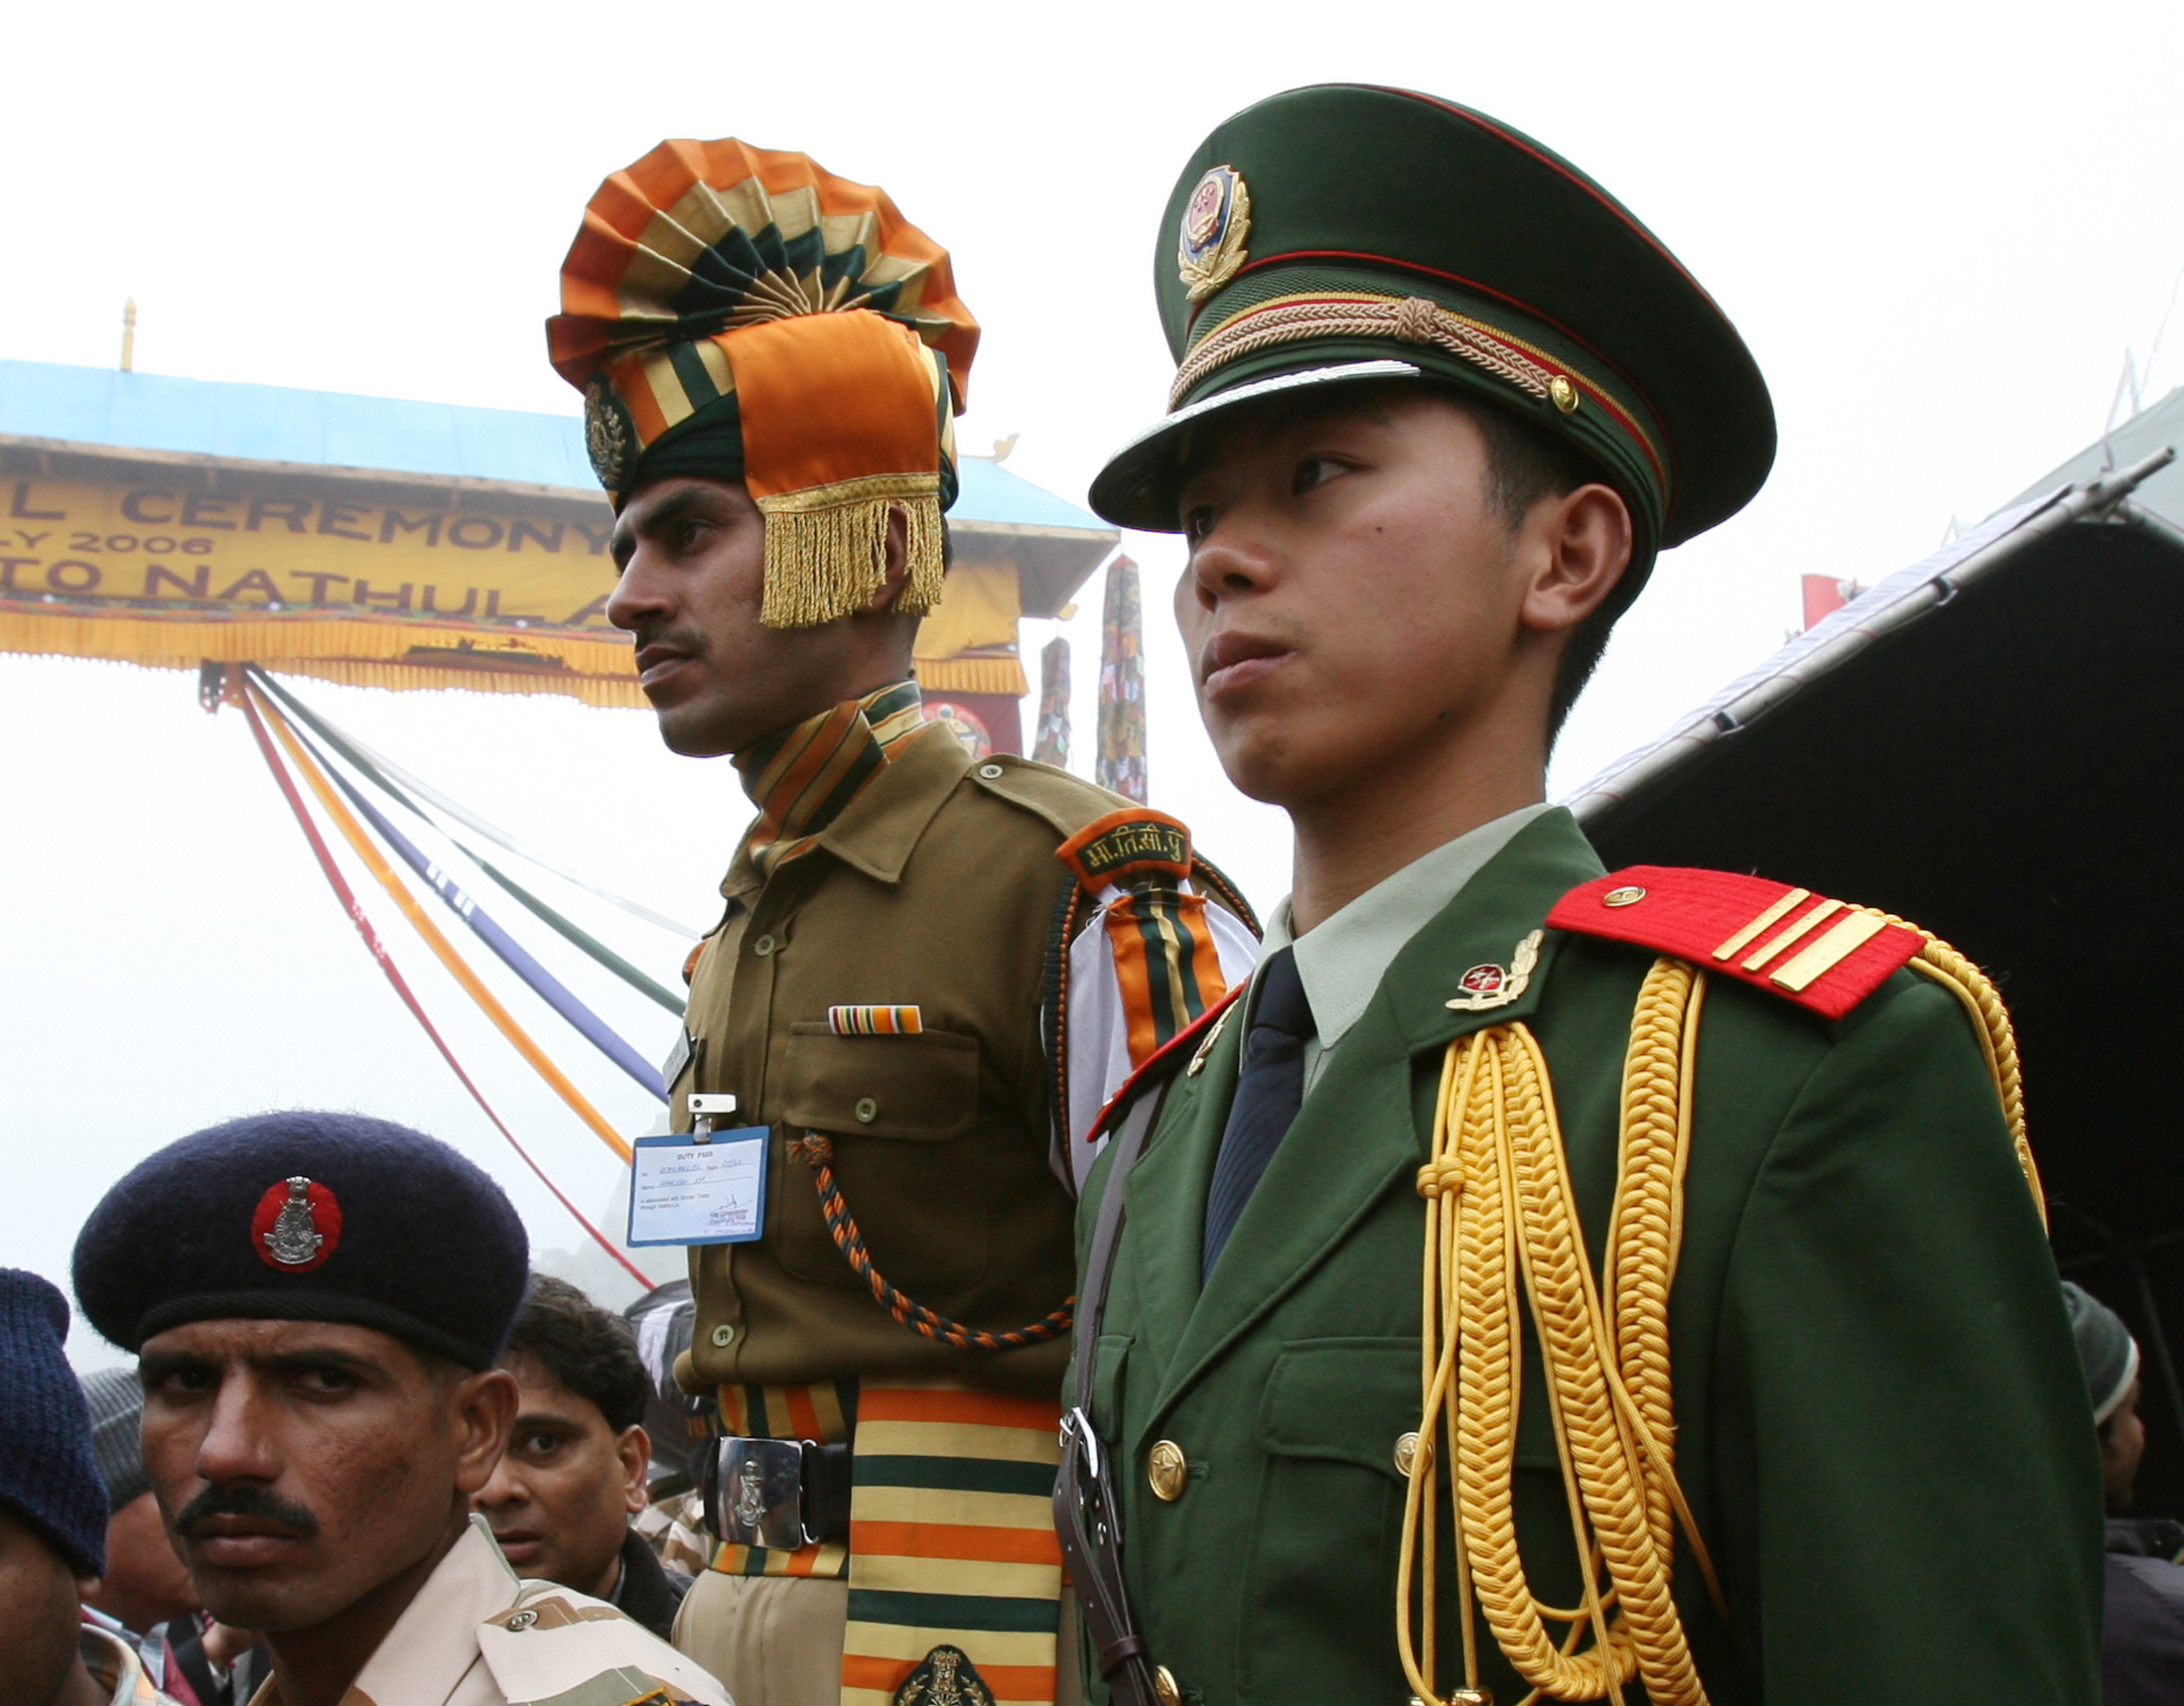 Fronteira causa confronto entre Índia e China